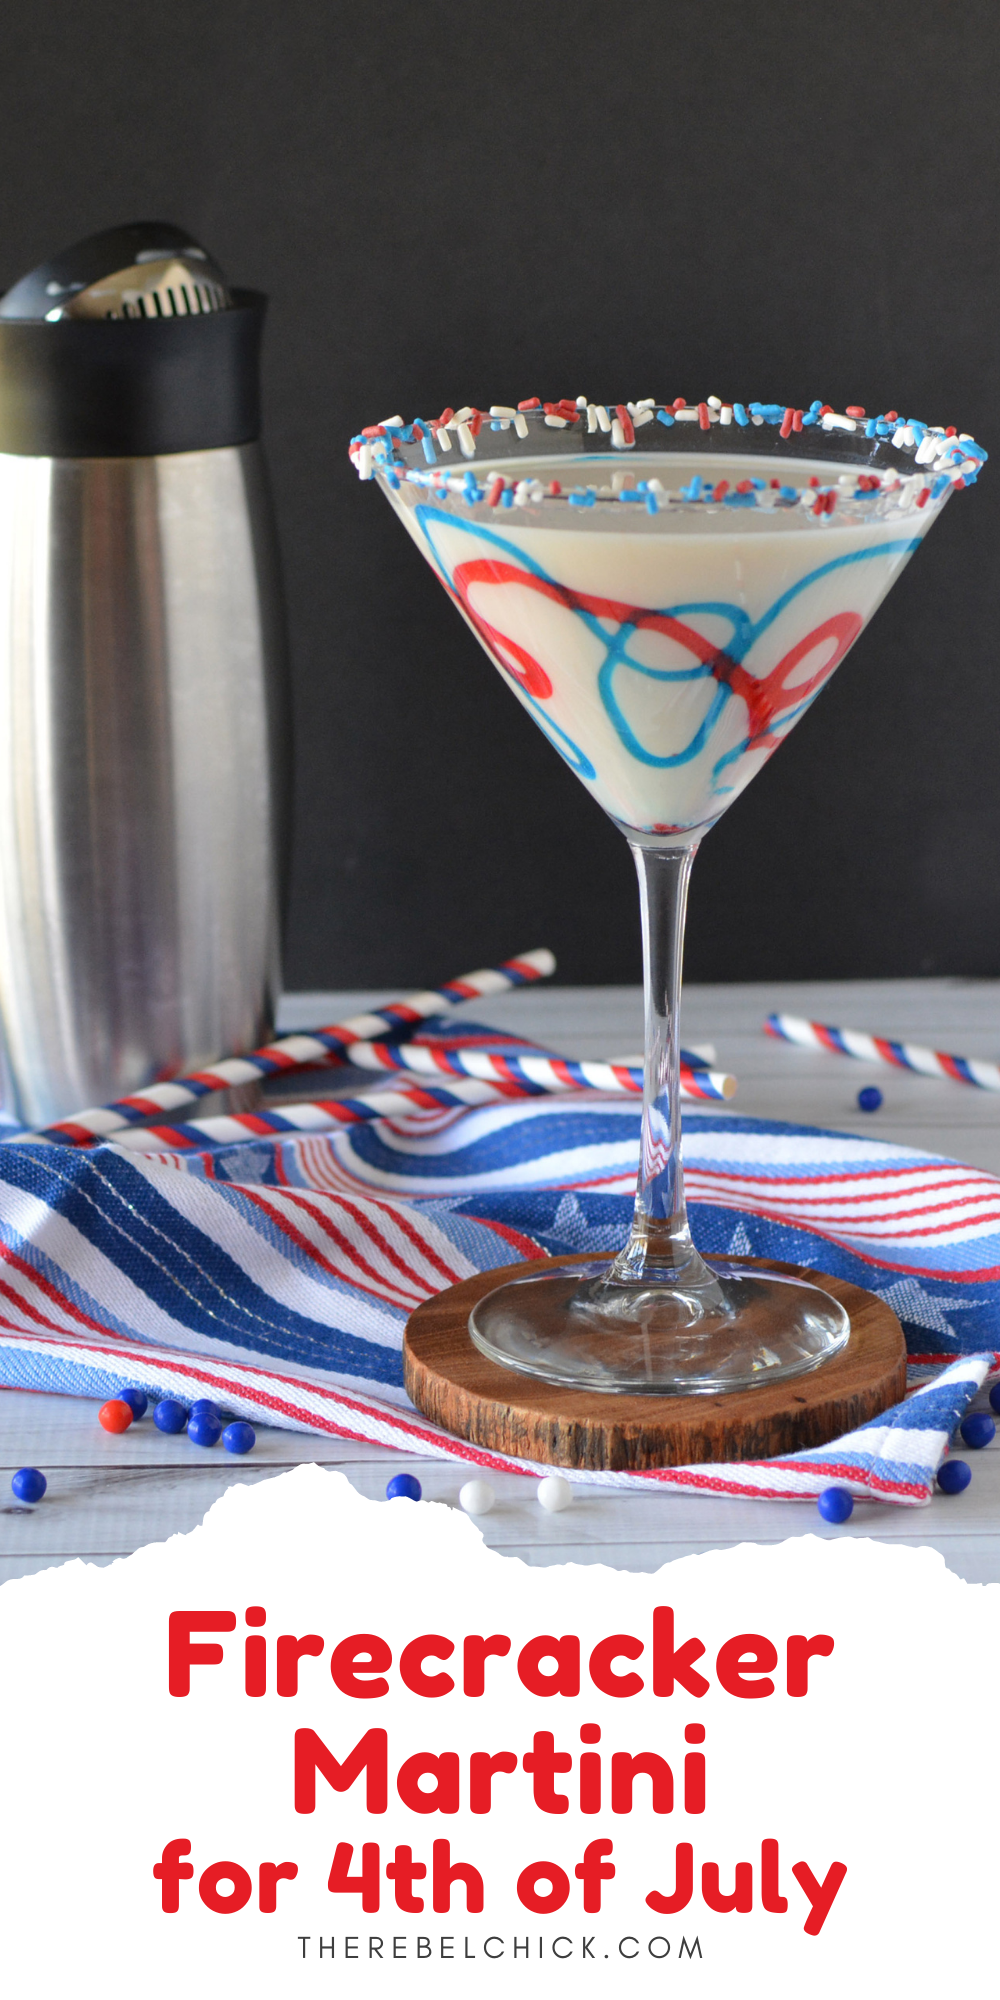 Firecracker Martini Recipe for 4th of July